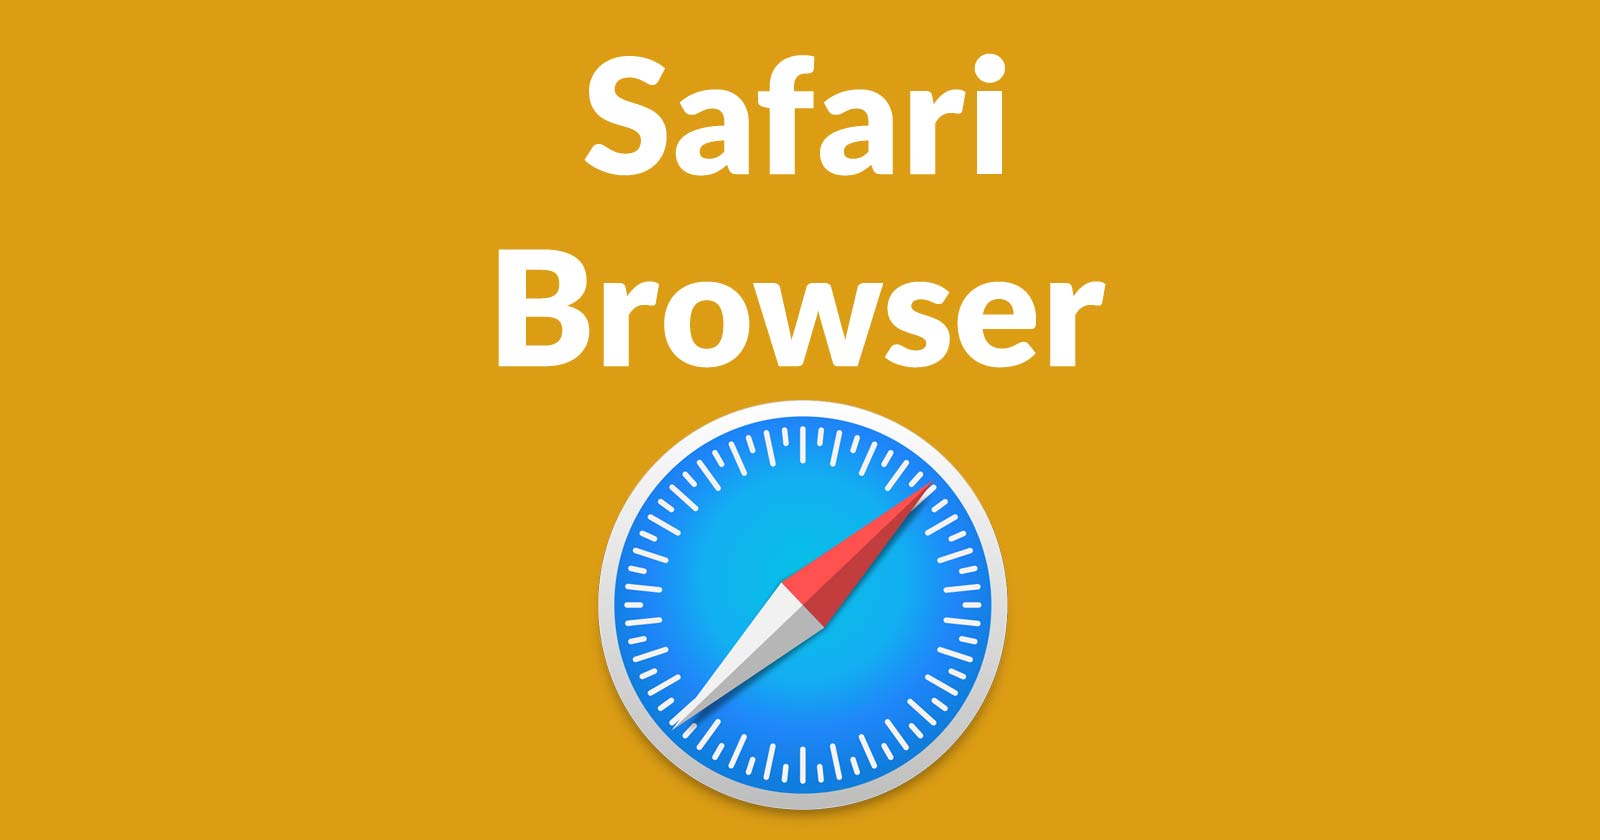 Image of Safari browser logo and the words, safari browser